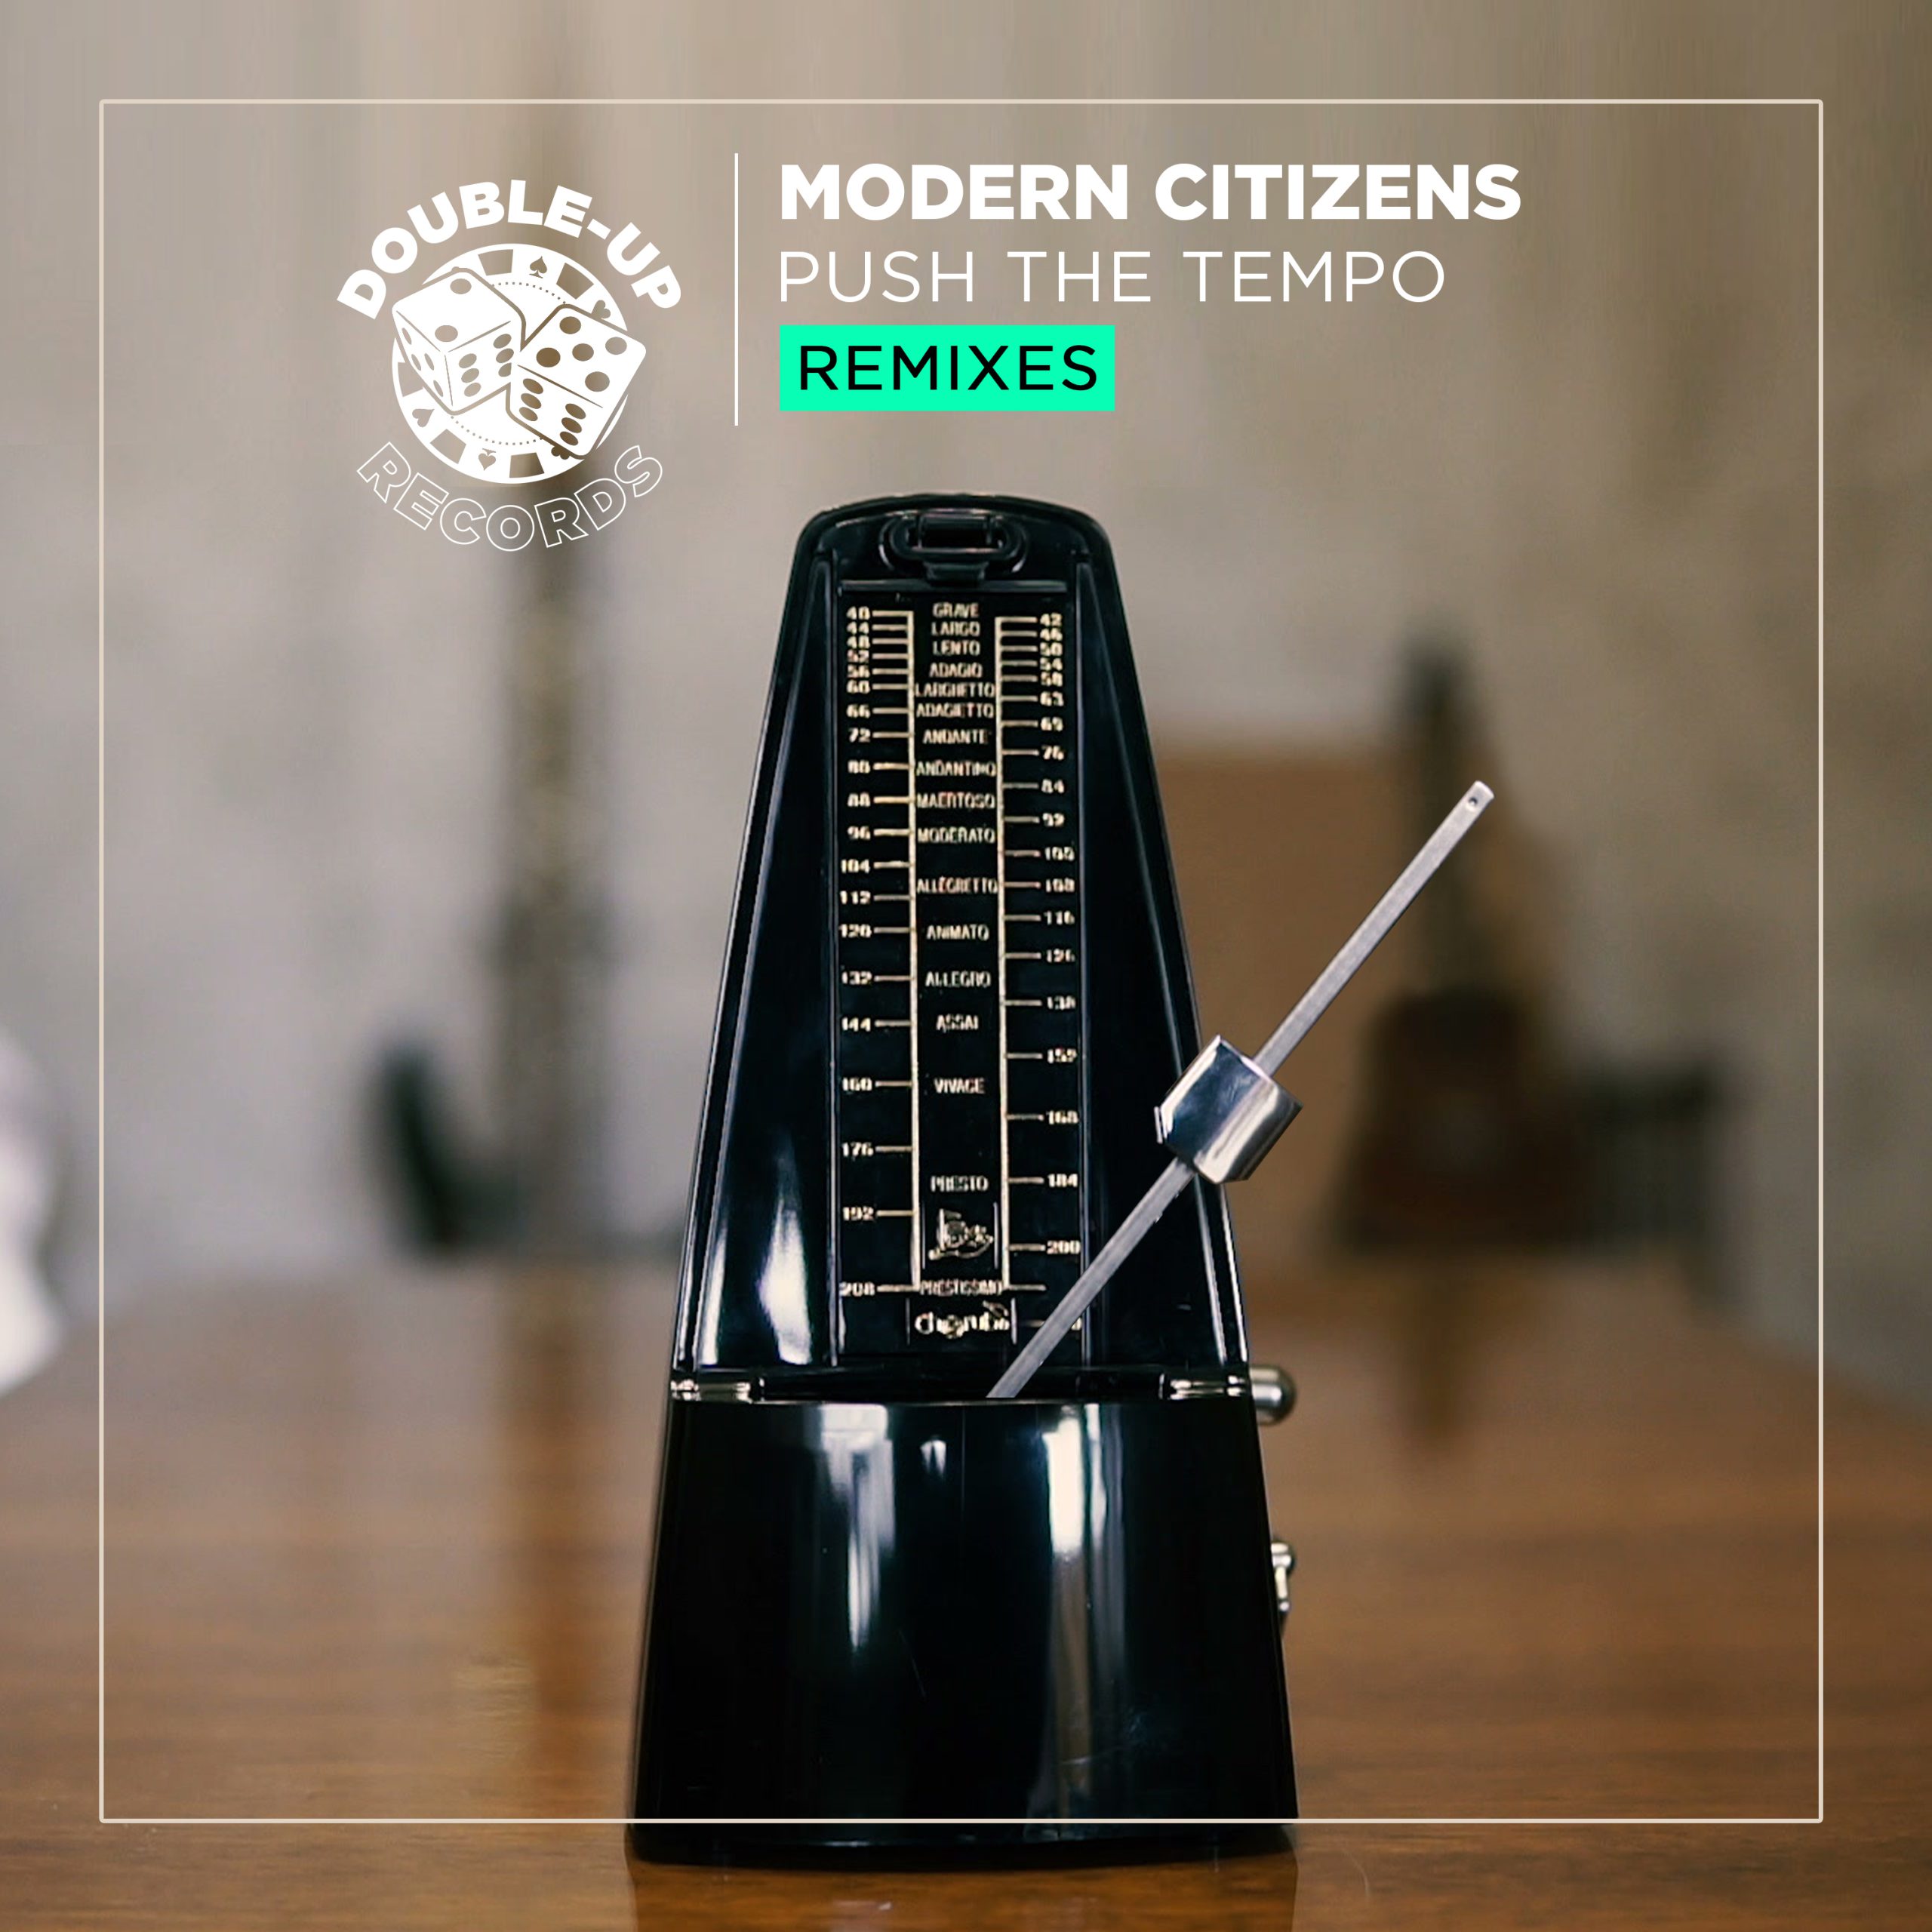 Angelo Ferreri remix of Modern Citizens